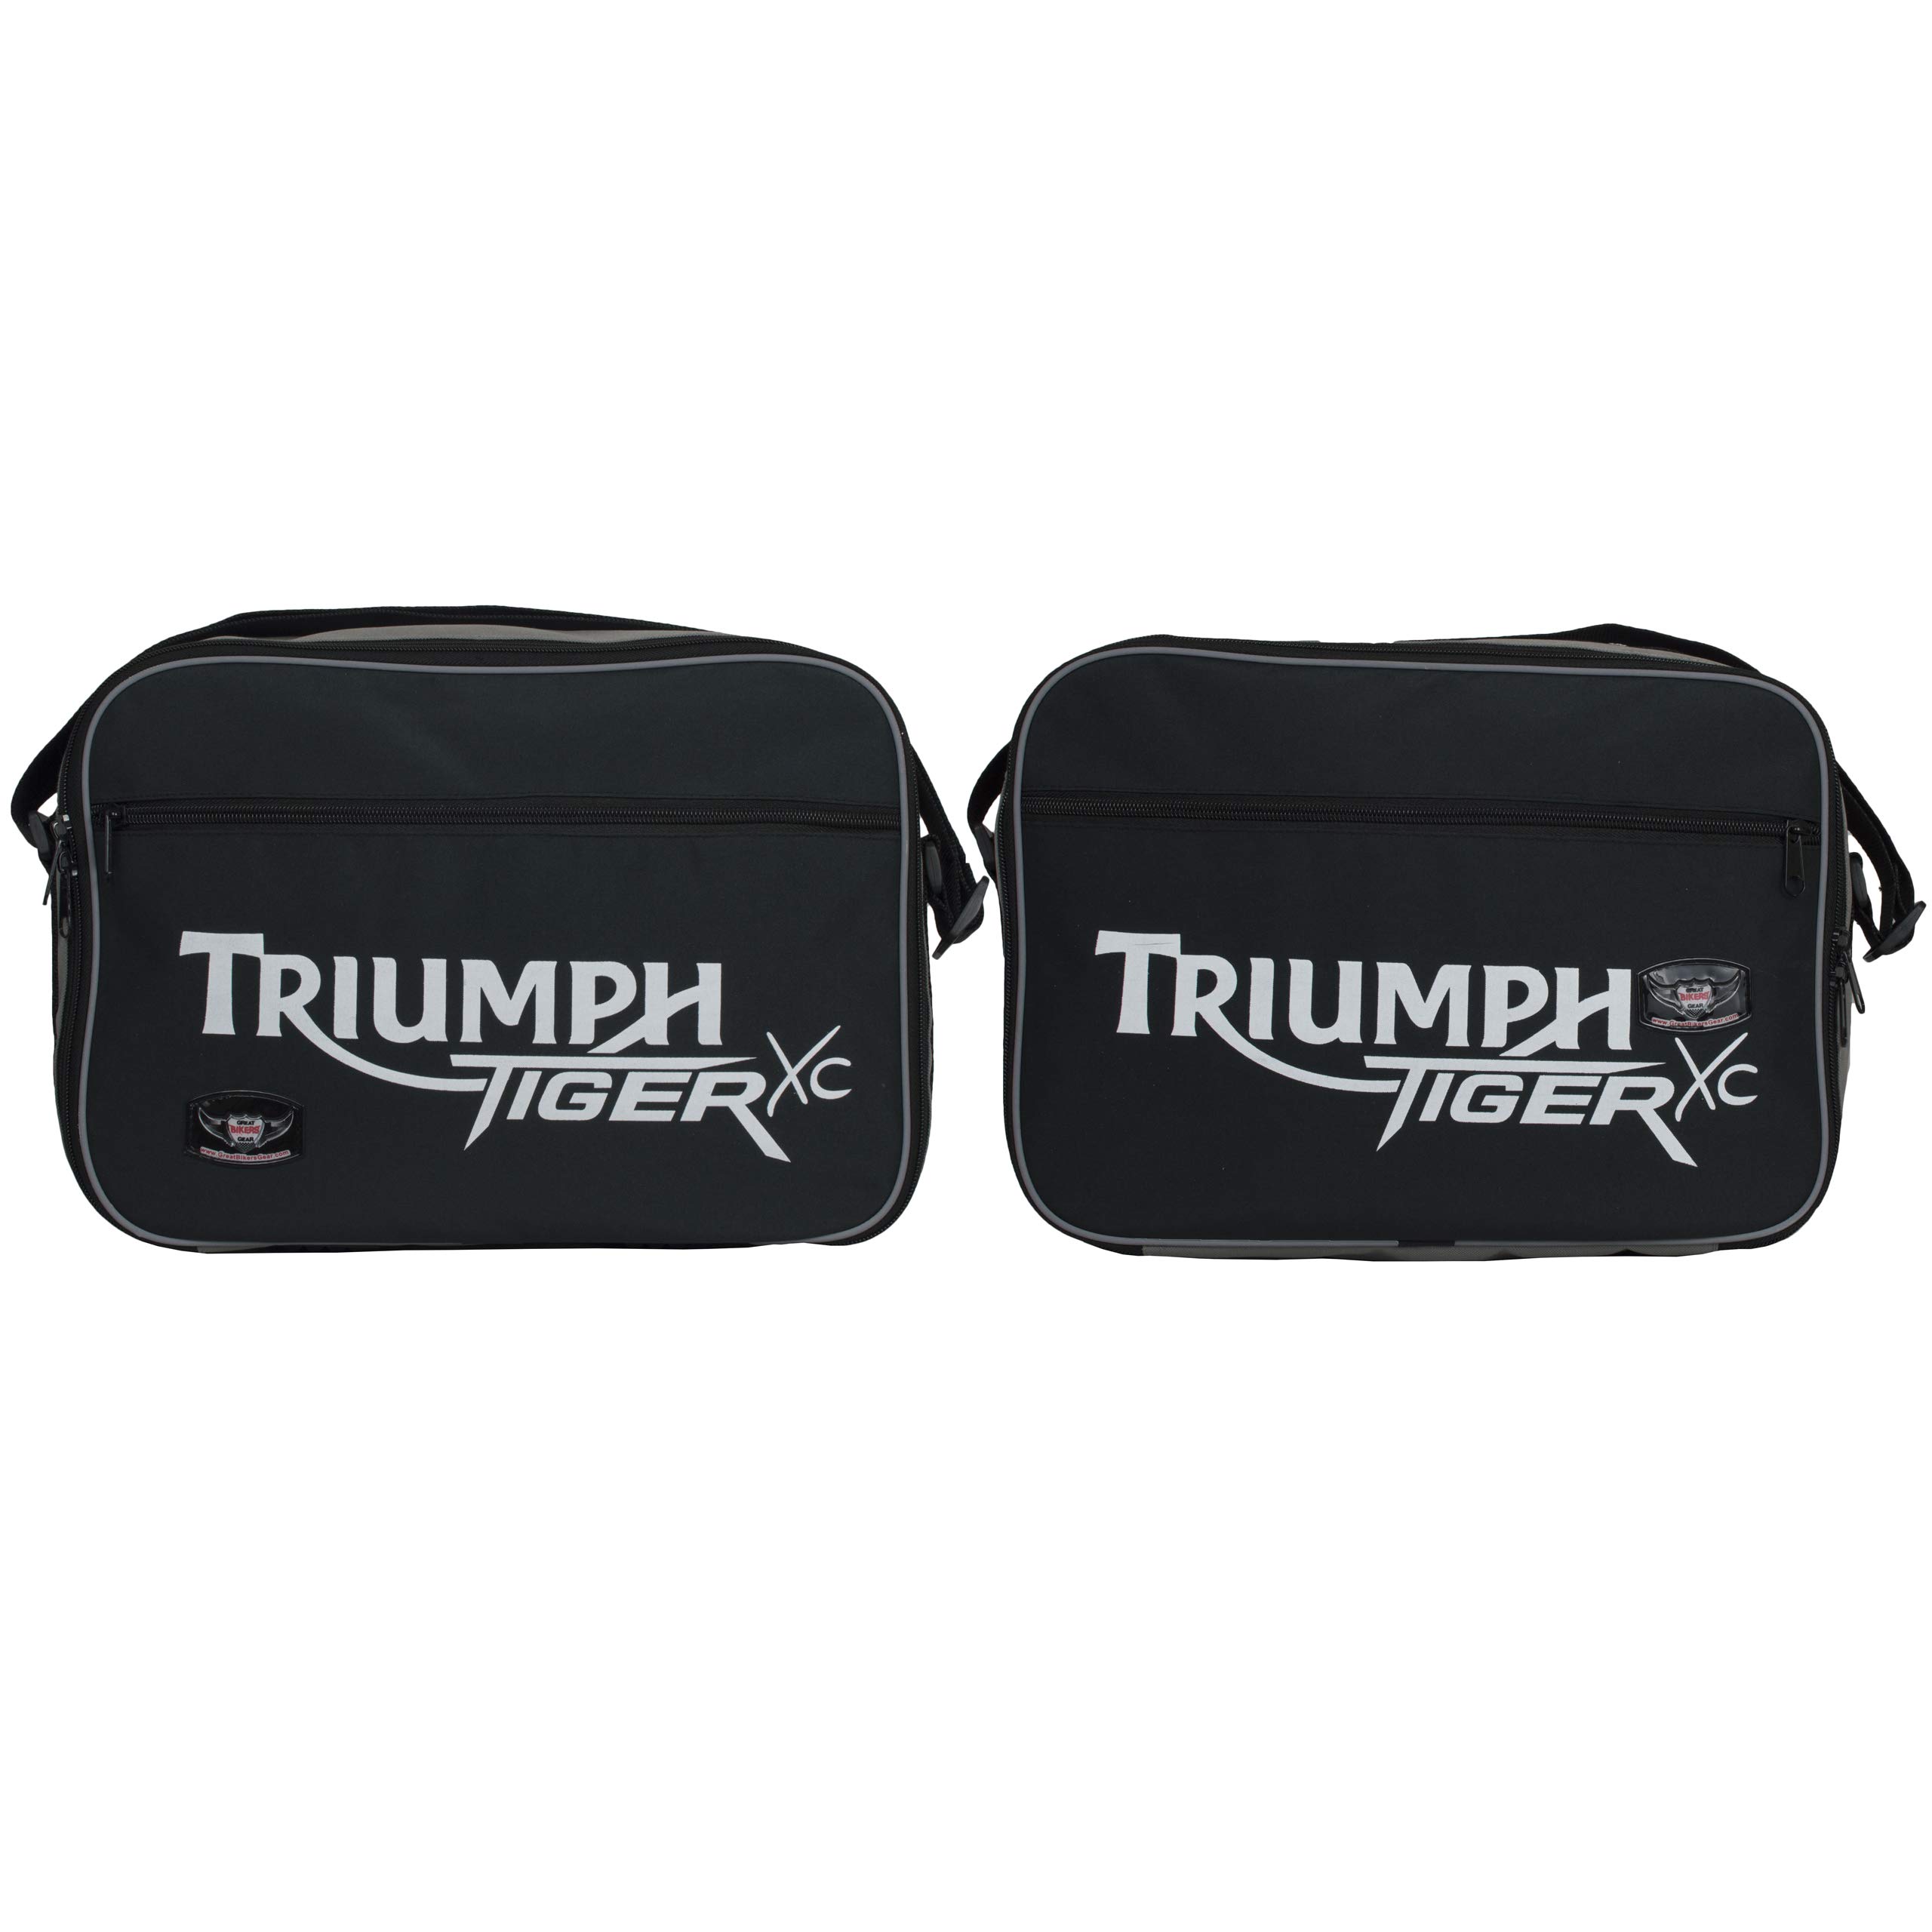 GREAT BIKERS GEAR - Triumph Tiger Explorer 1200 Bedruckte Packtaschen-Innengepäcktaschen